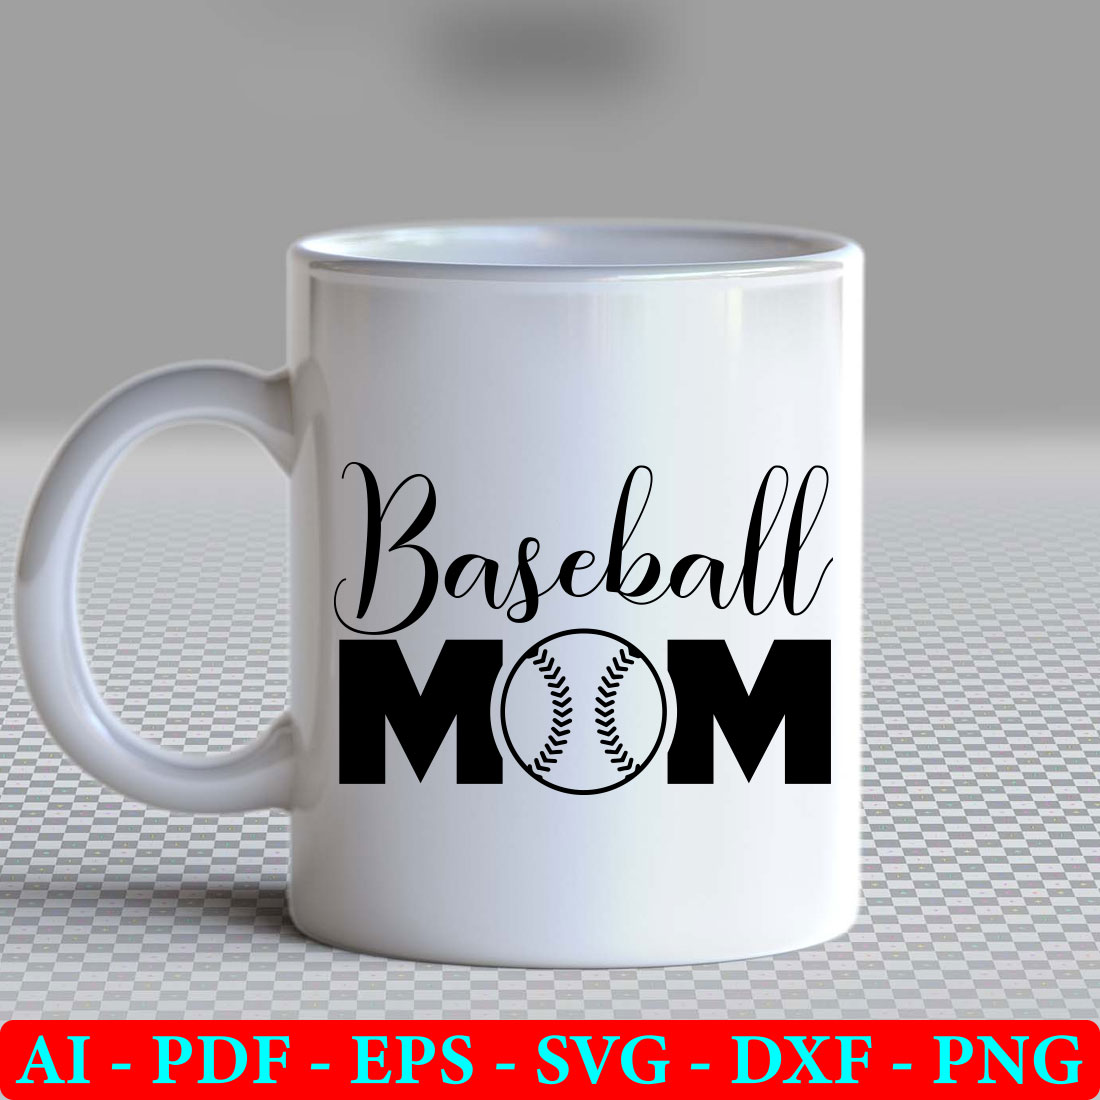 White coffee mug with a baseball mom on it.